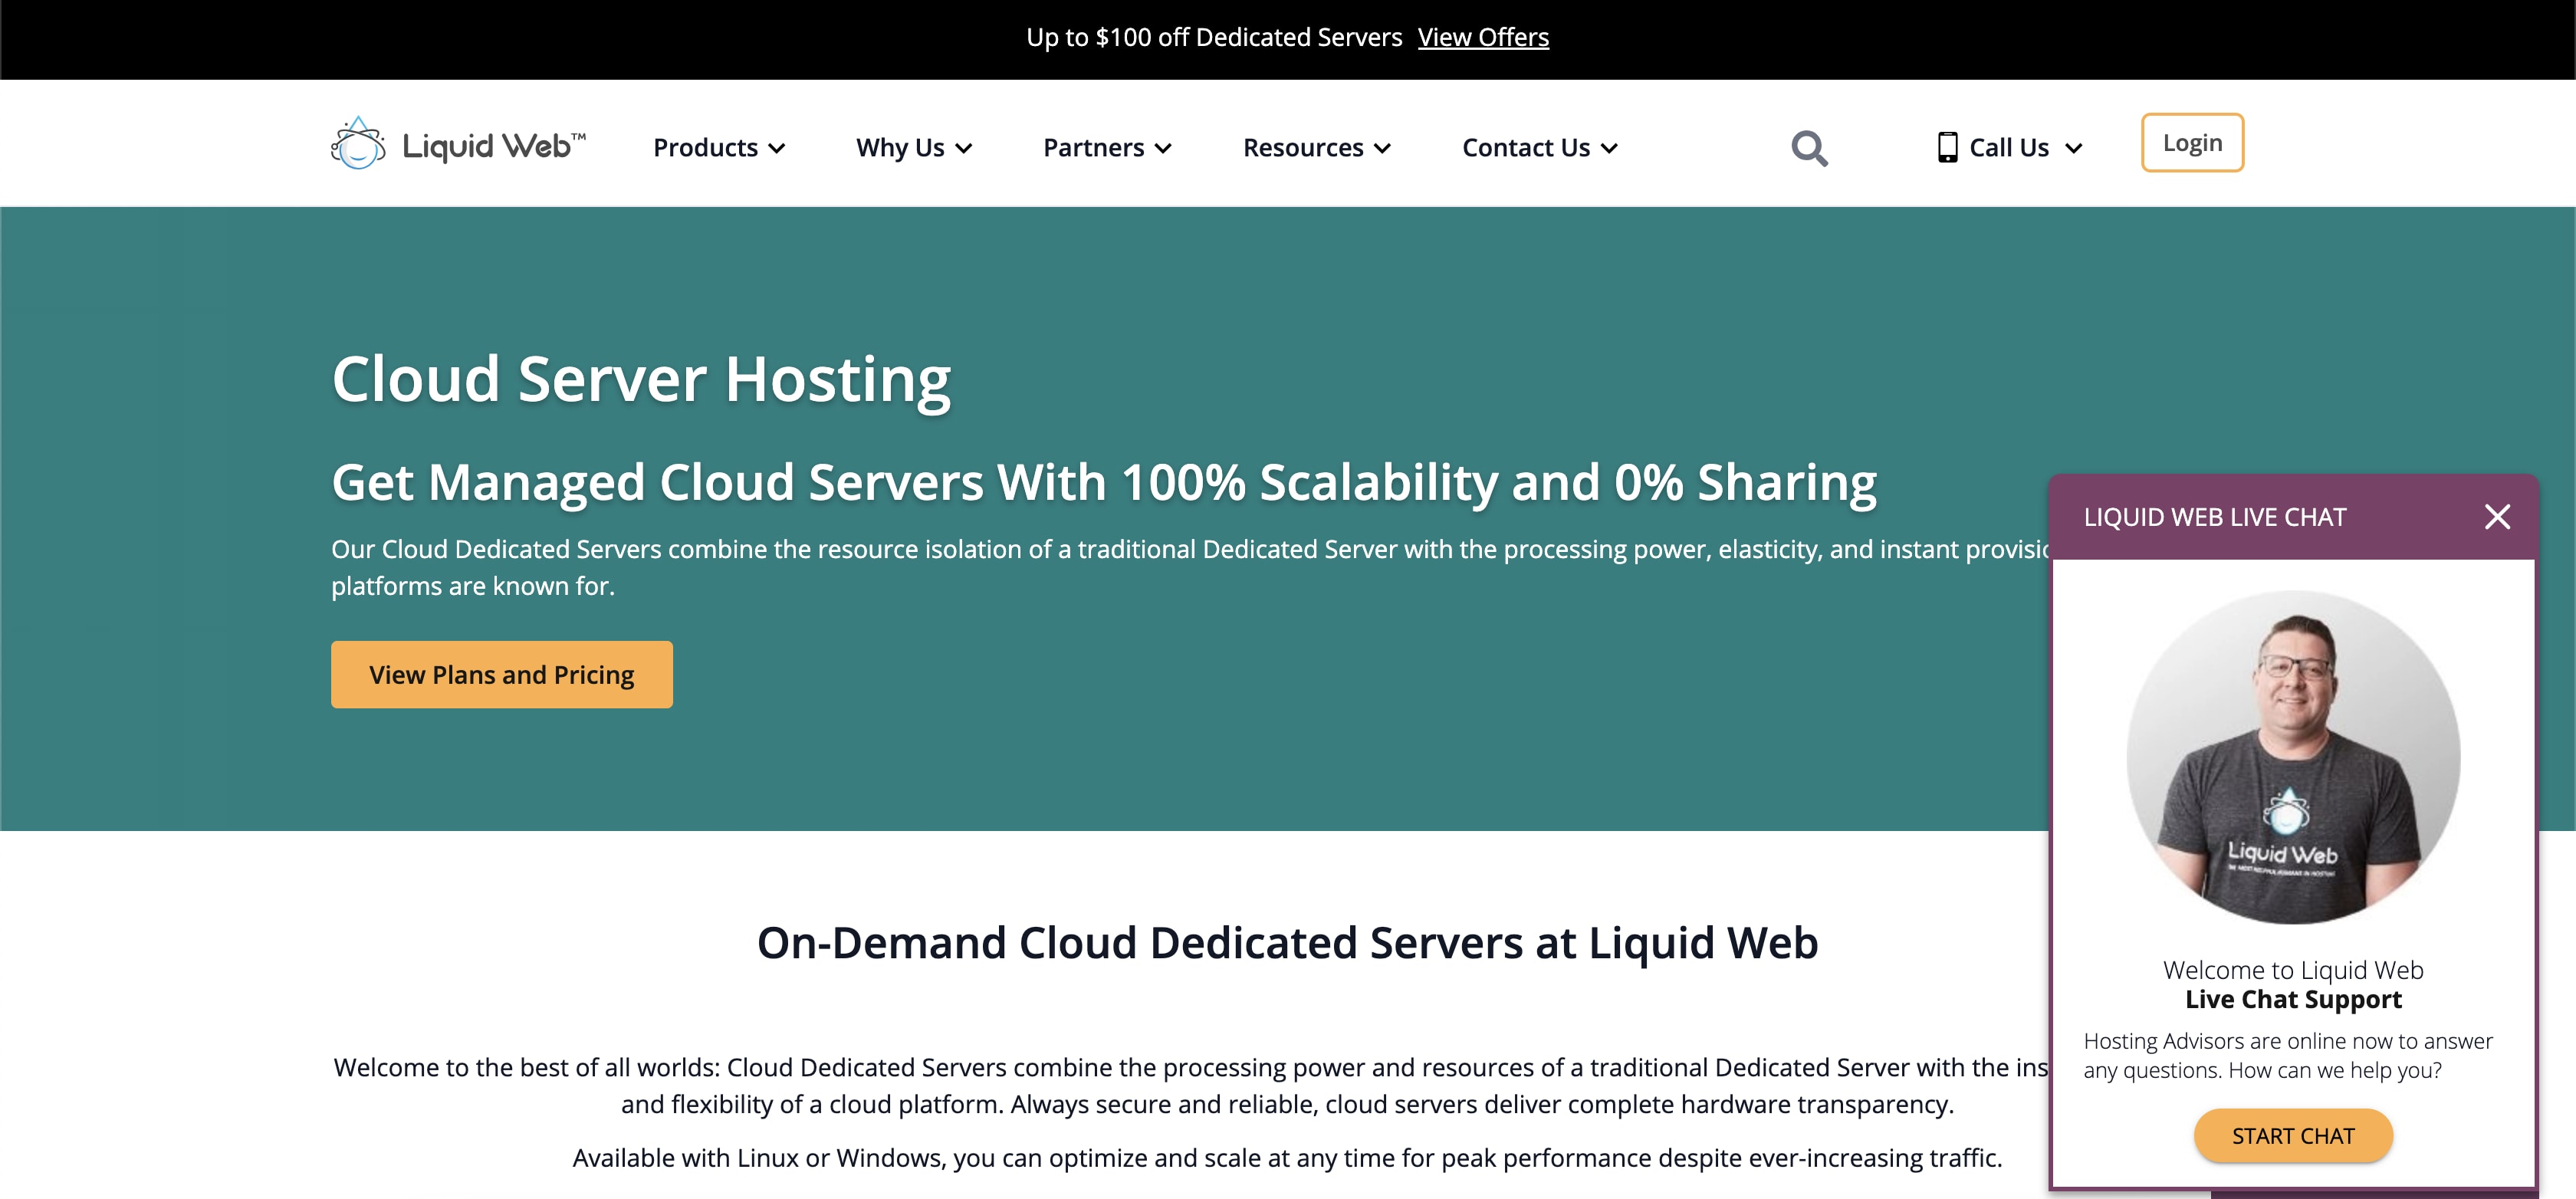 Liquid Web’s Dedicated Cloud Server hosting.